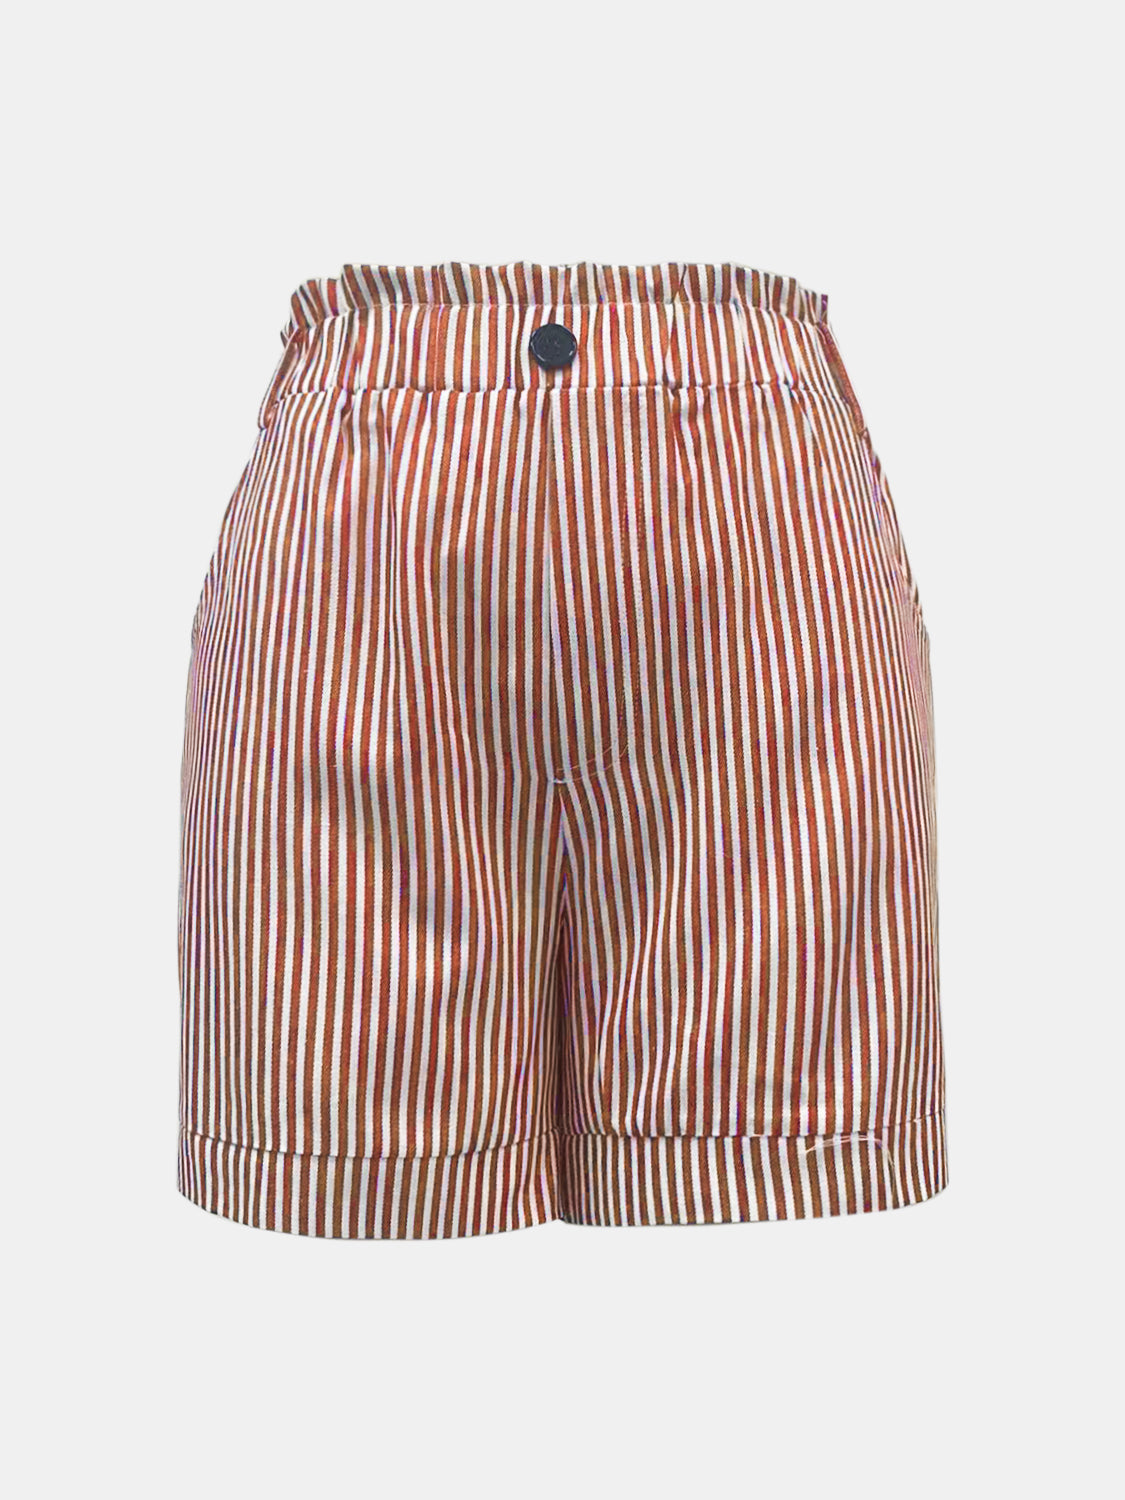 High Waist Striped Shorts